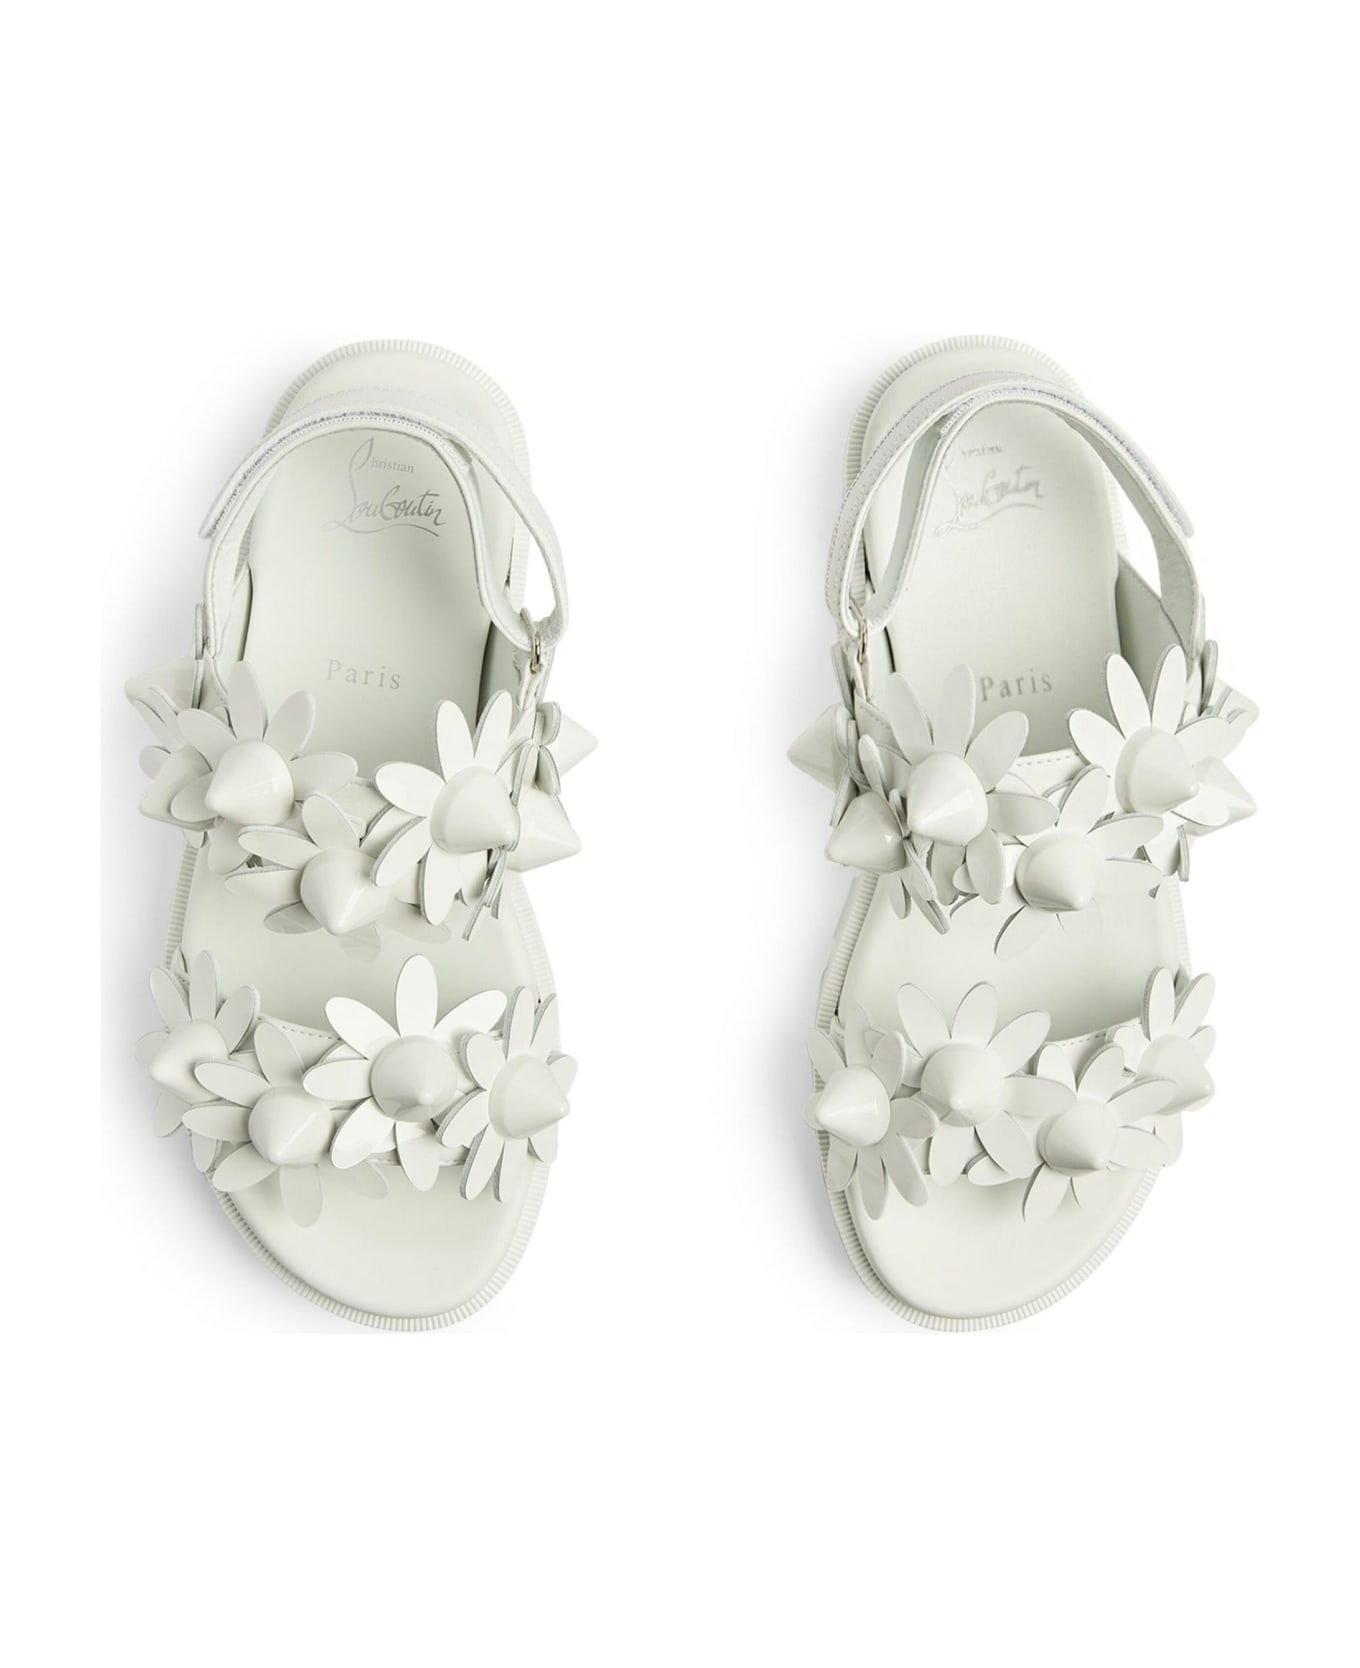 Christian Louboutin Daisy Spikes Cool Sandals - White サンダル